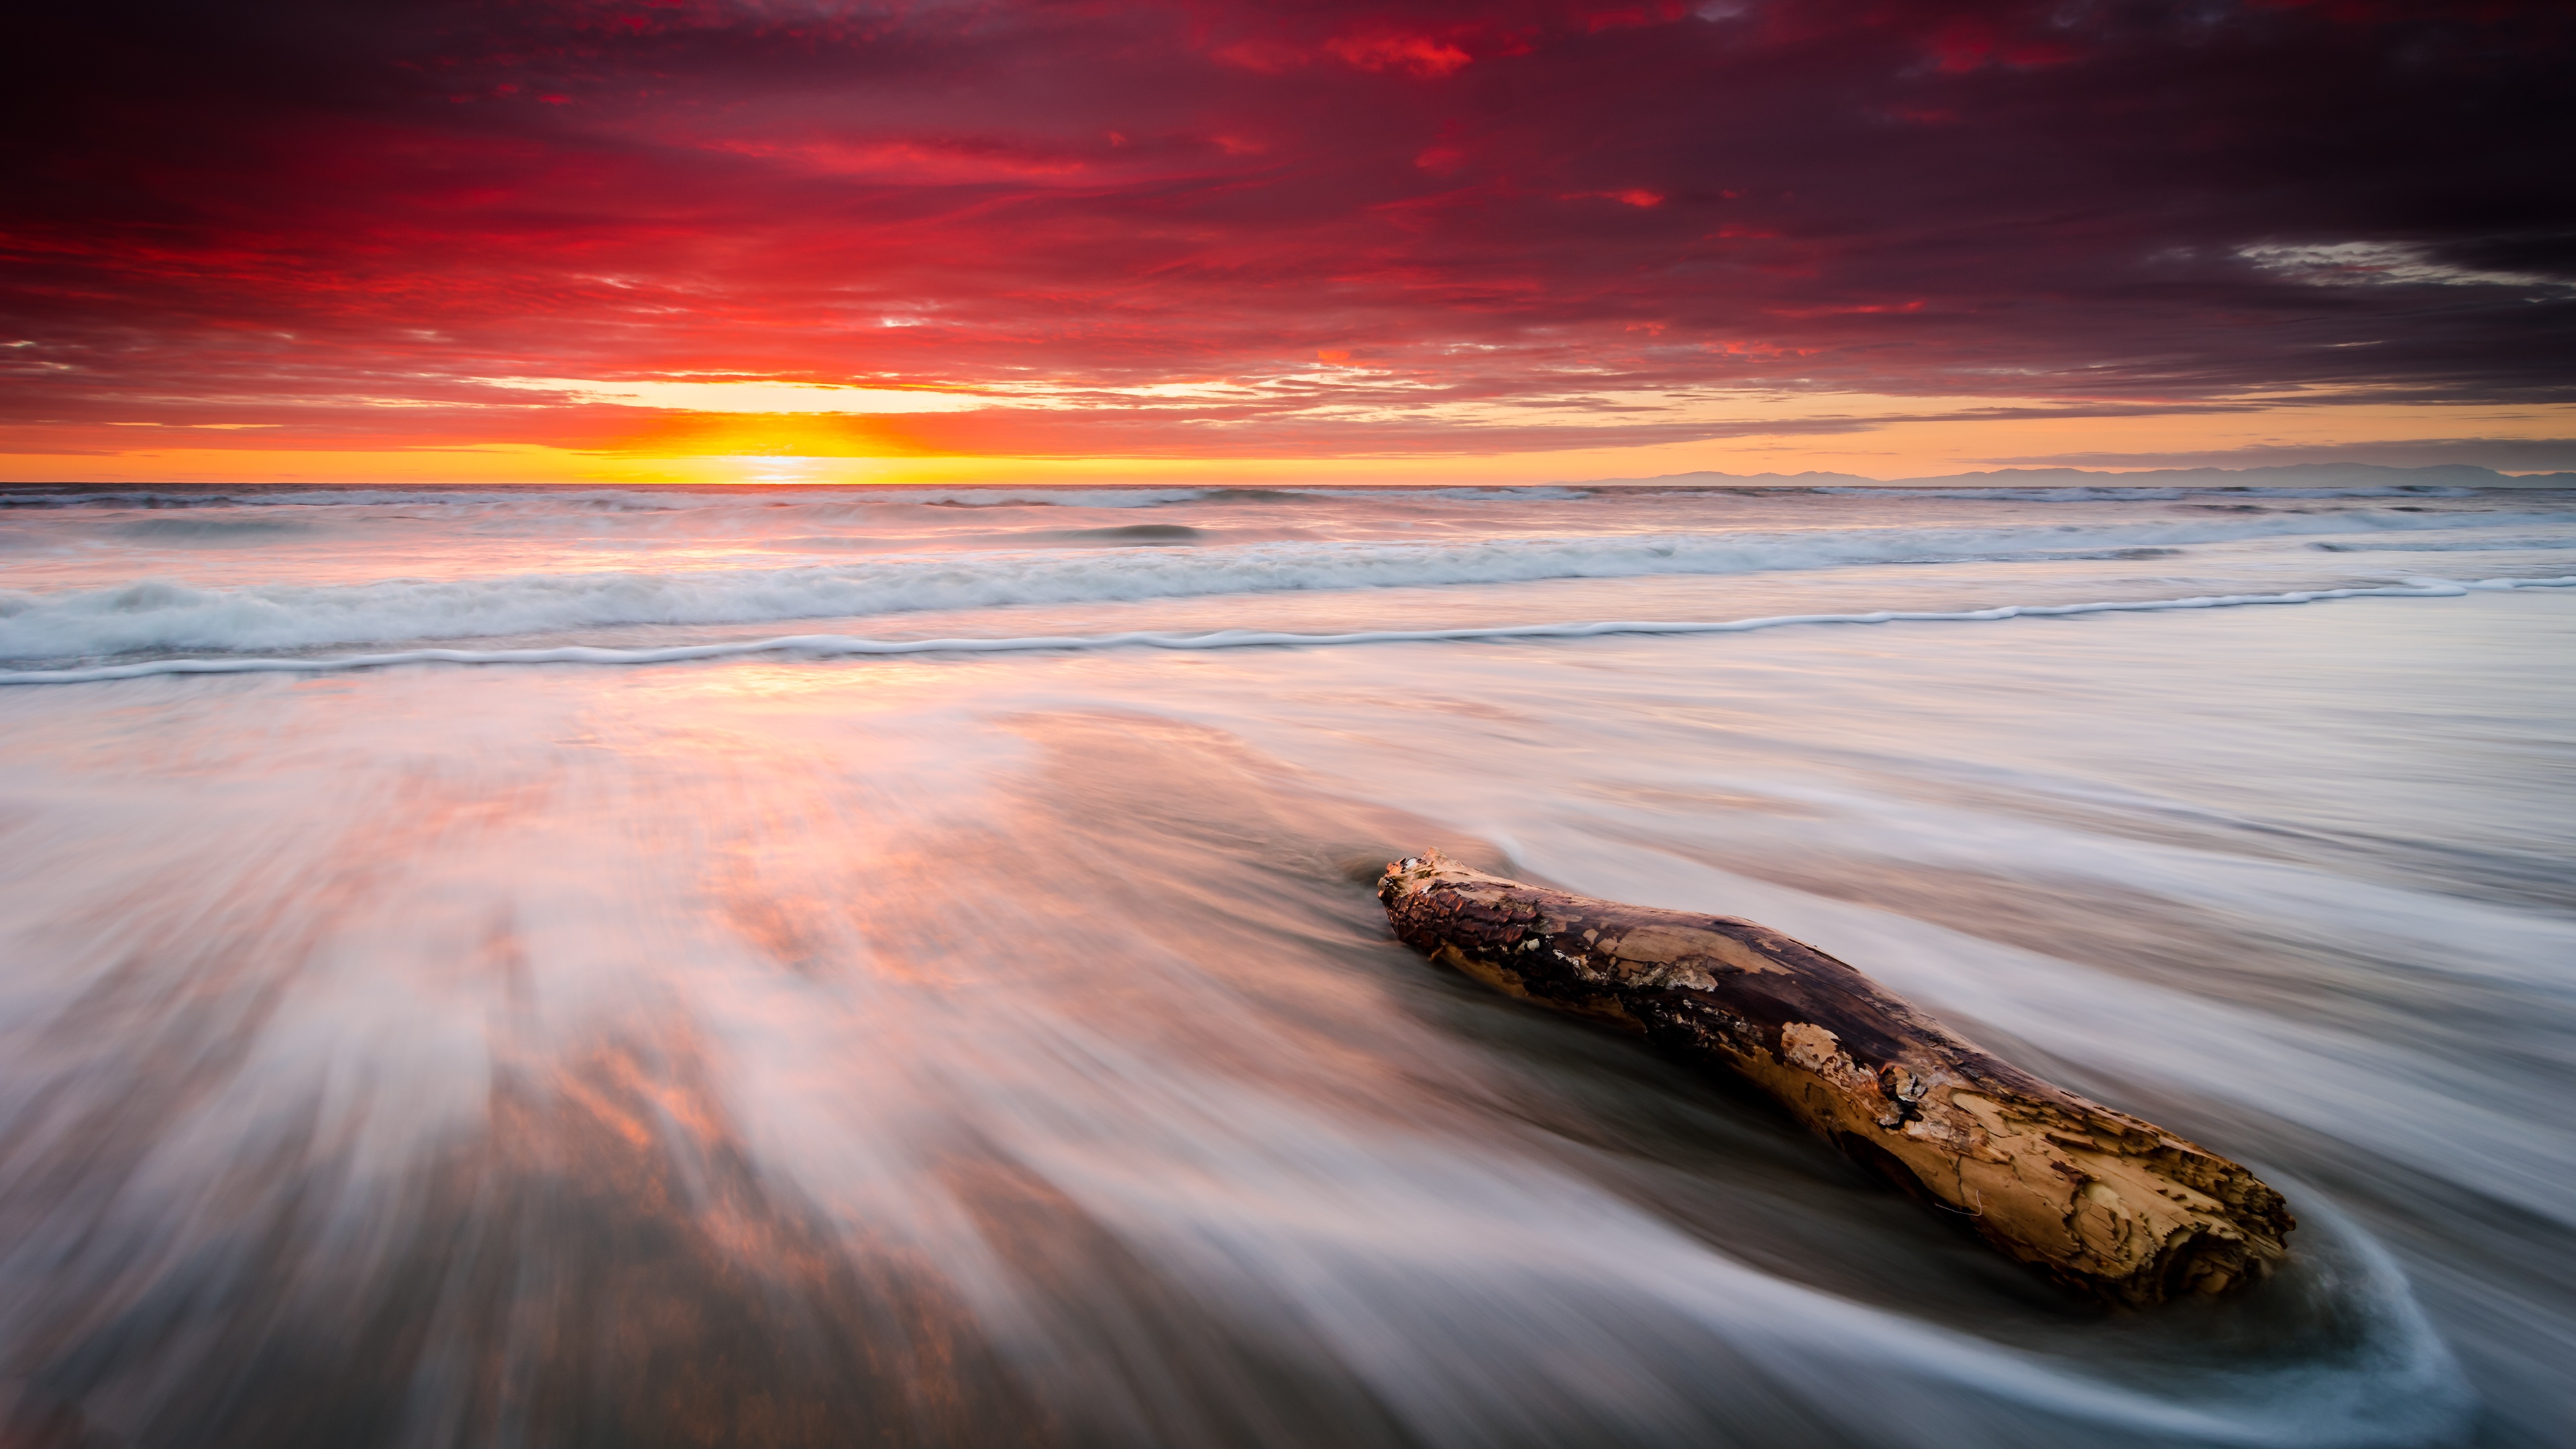 Leithfield Beach Sunrise Wallpaper in jpg format for free download